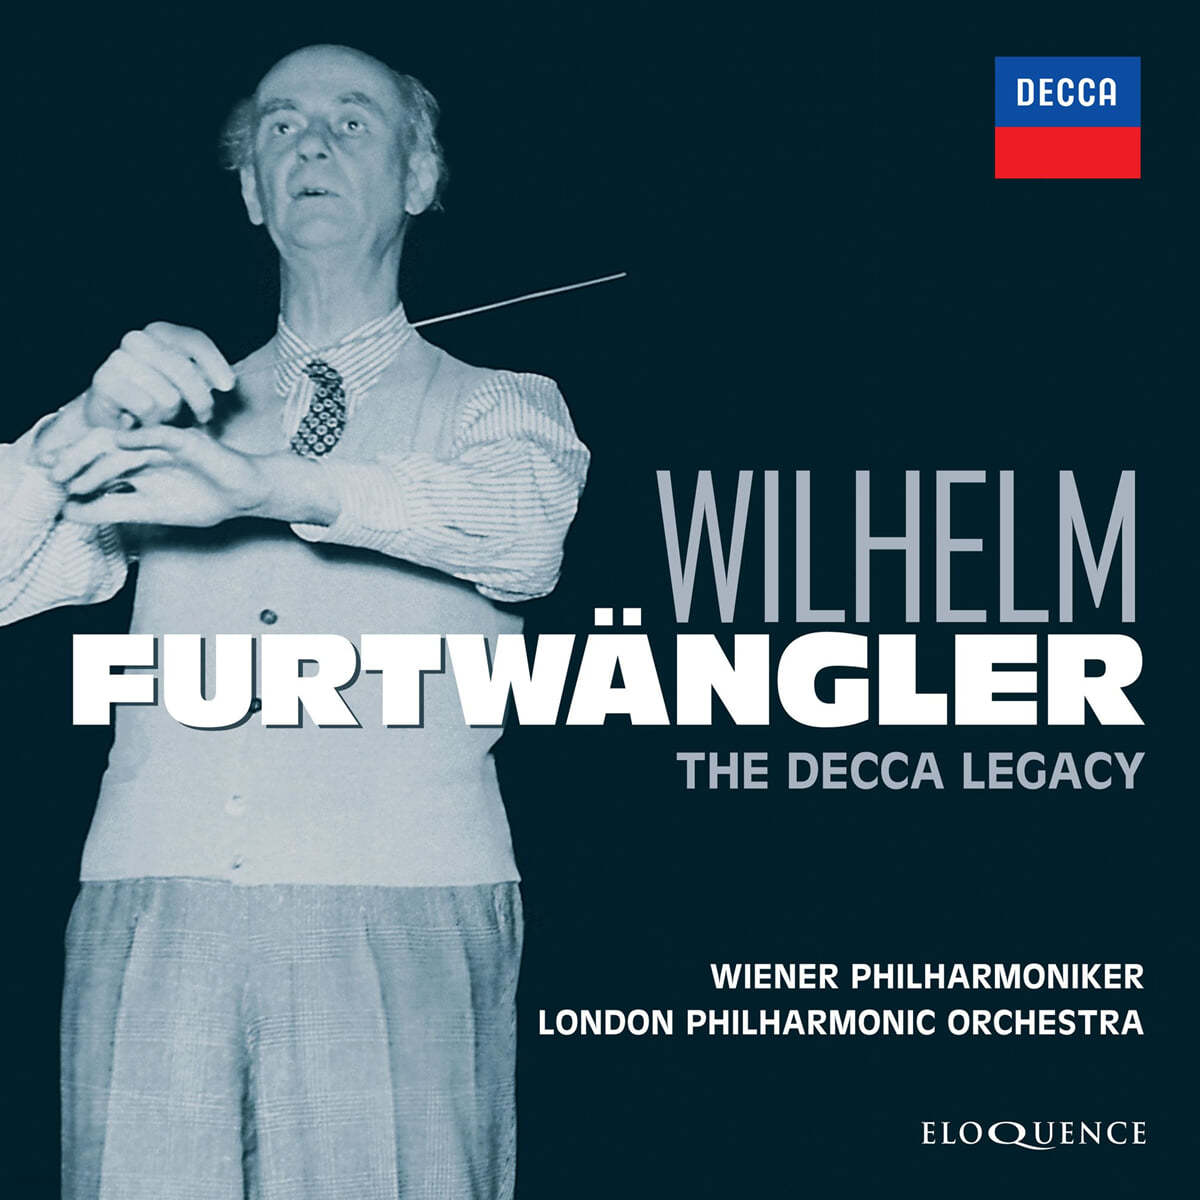 Wilhelm Furtwangler 빌헬름 푸르트벵글러 영국 데카 녹음 모음집 (The Decca Legacy) 